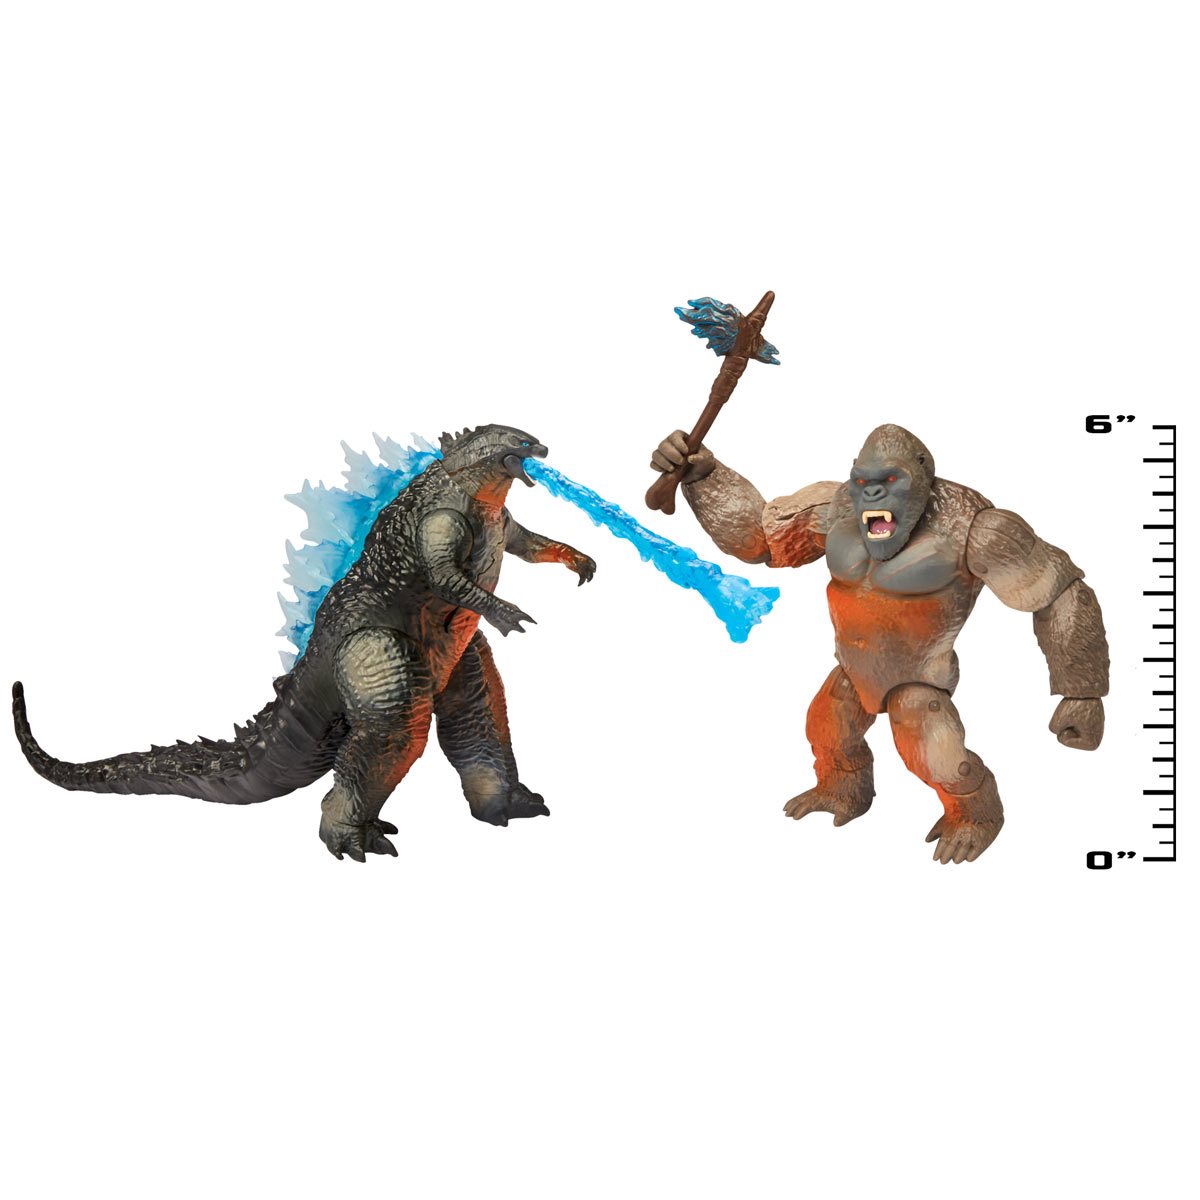 MonsterVerse Godzilla vs. Kong Hollow Earth Monster Wave 2 Action Figure  Case